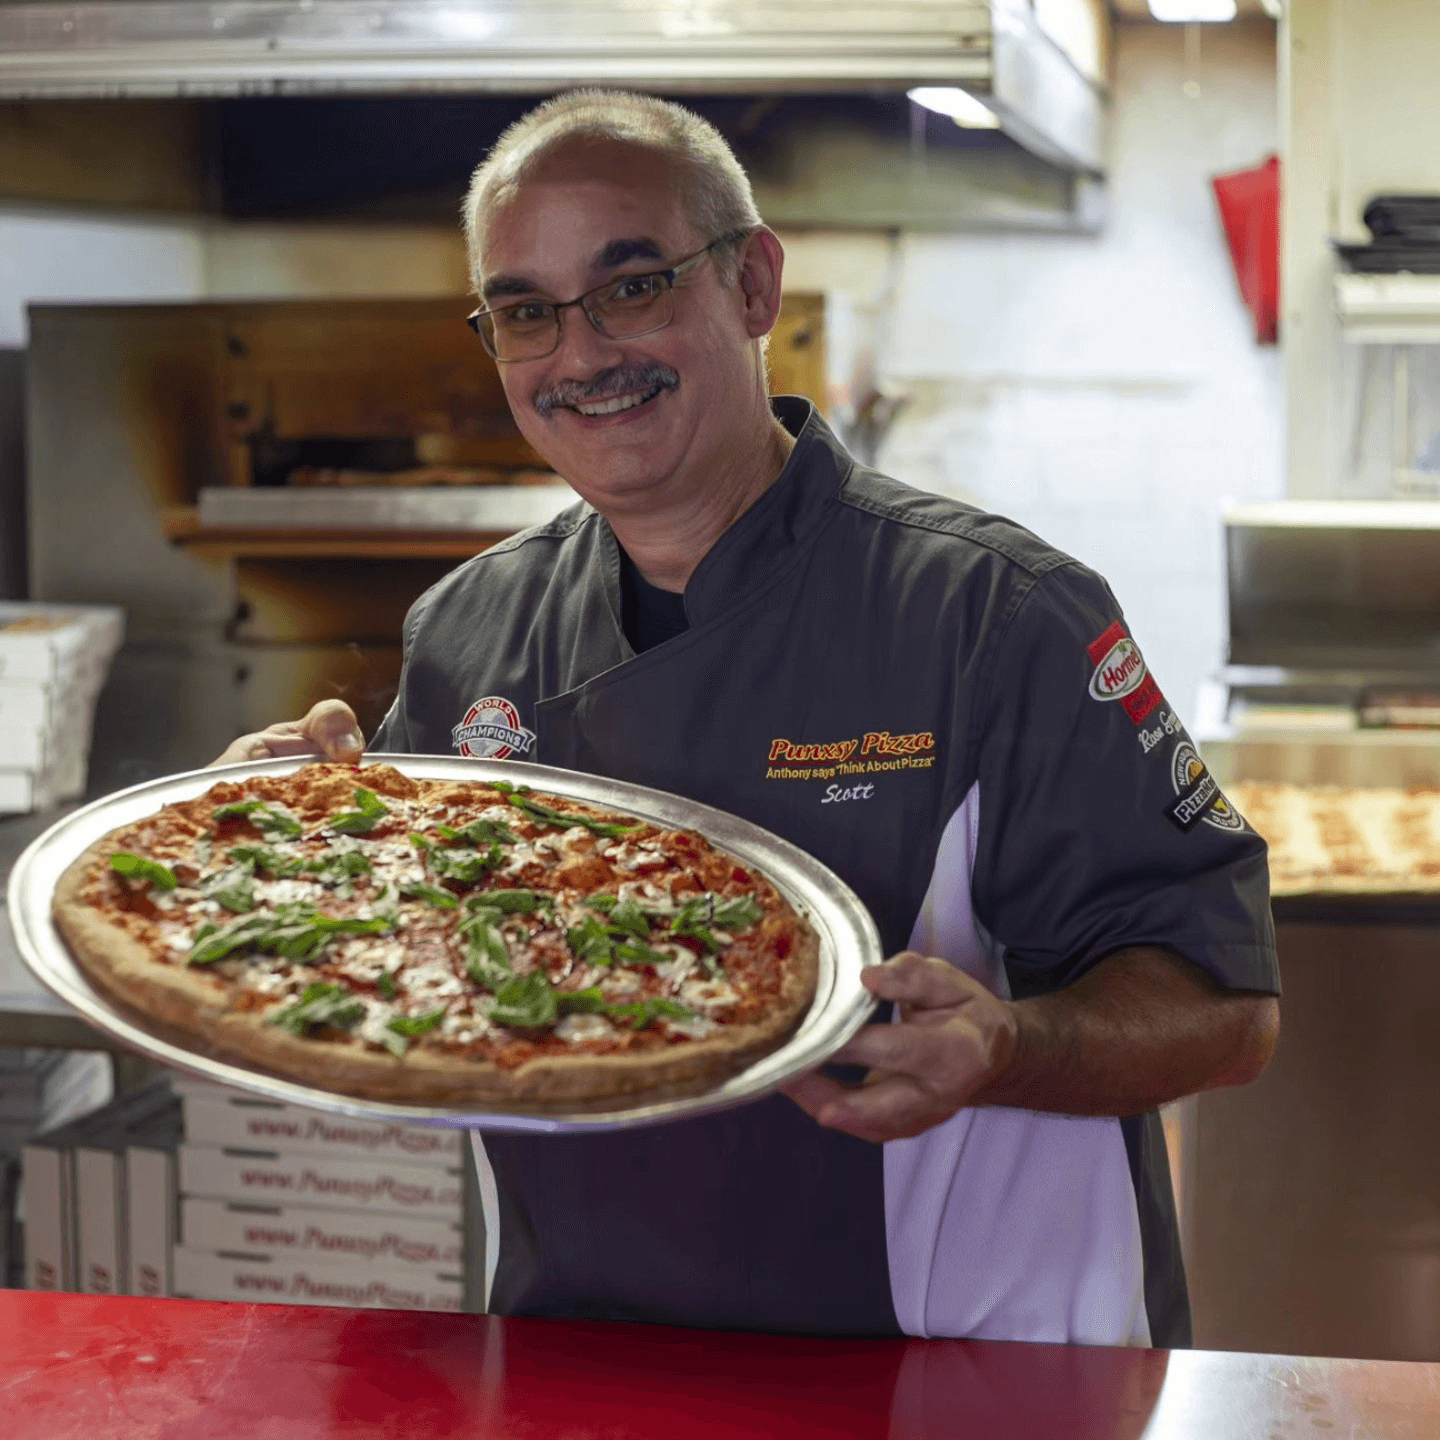 Punxsy Pizza: Scott's Culinary Triumph!